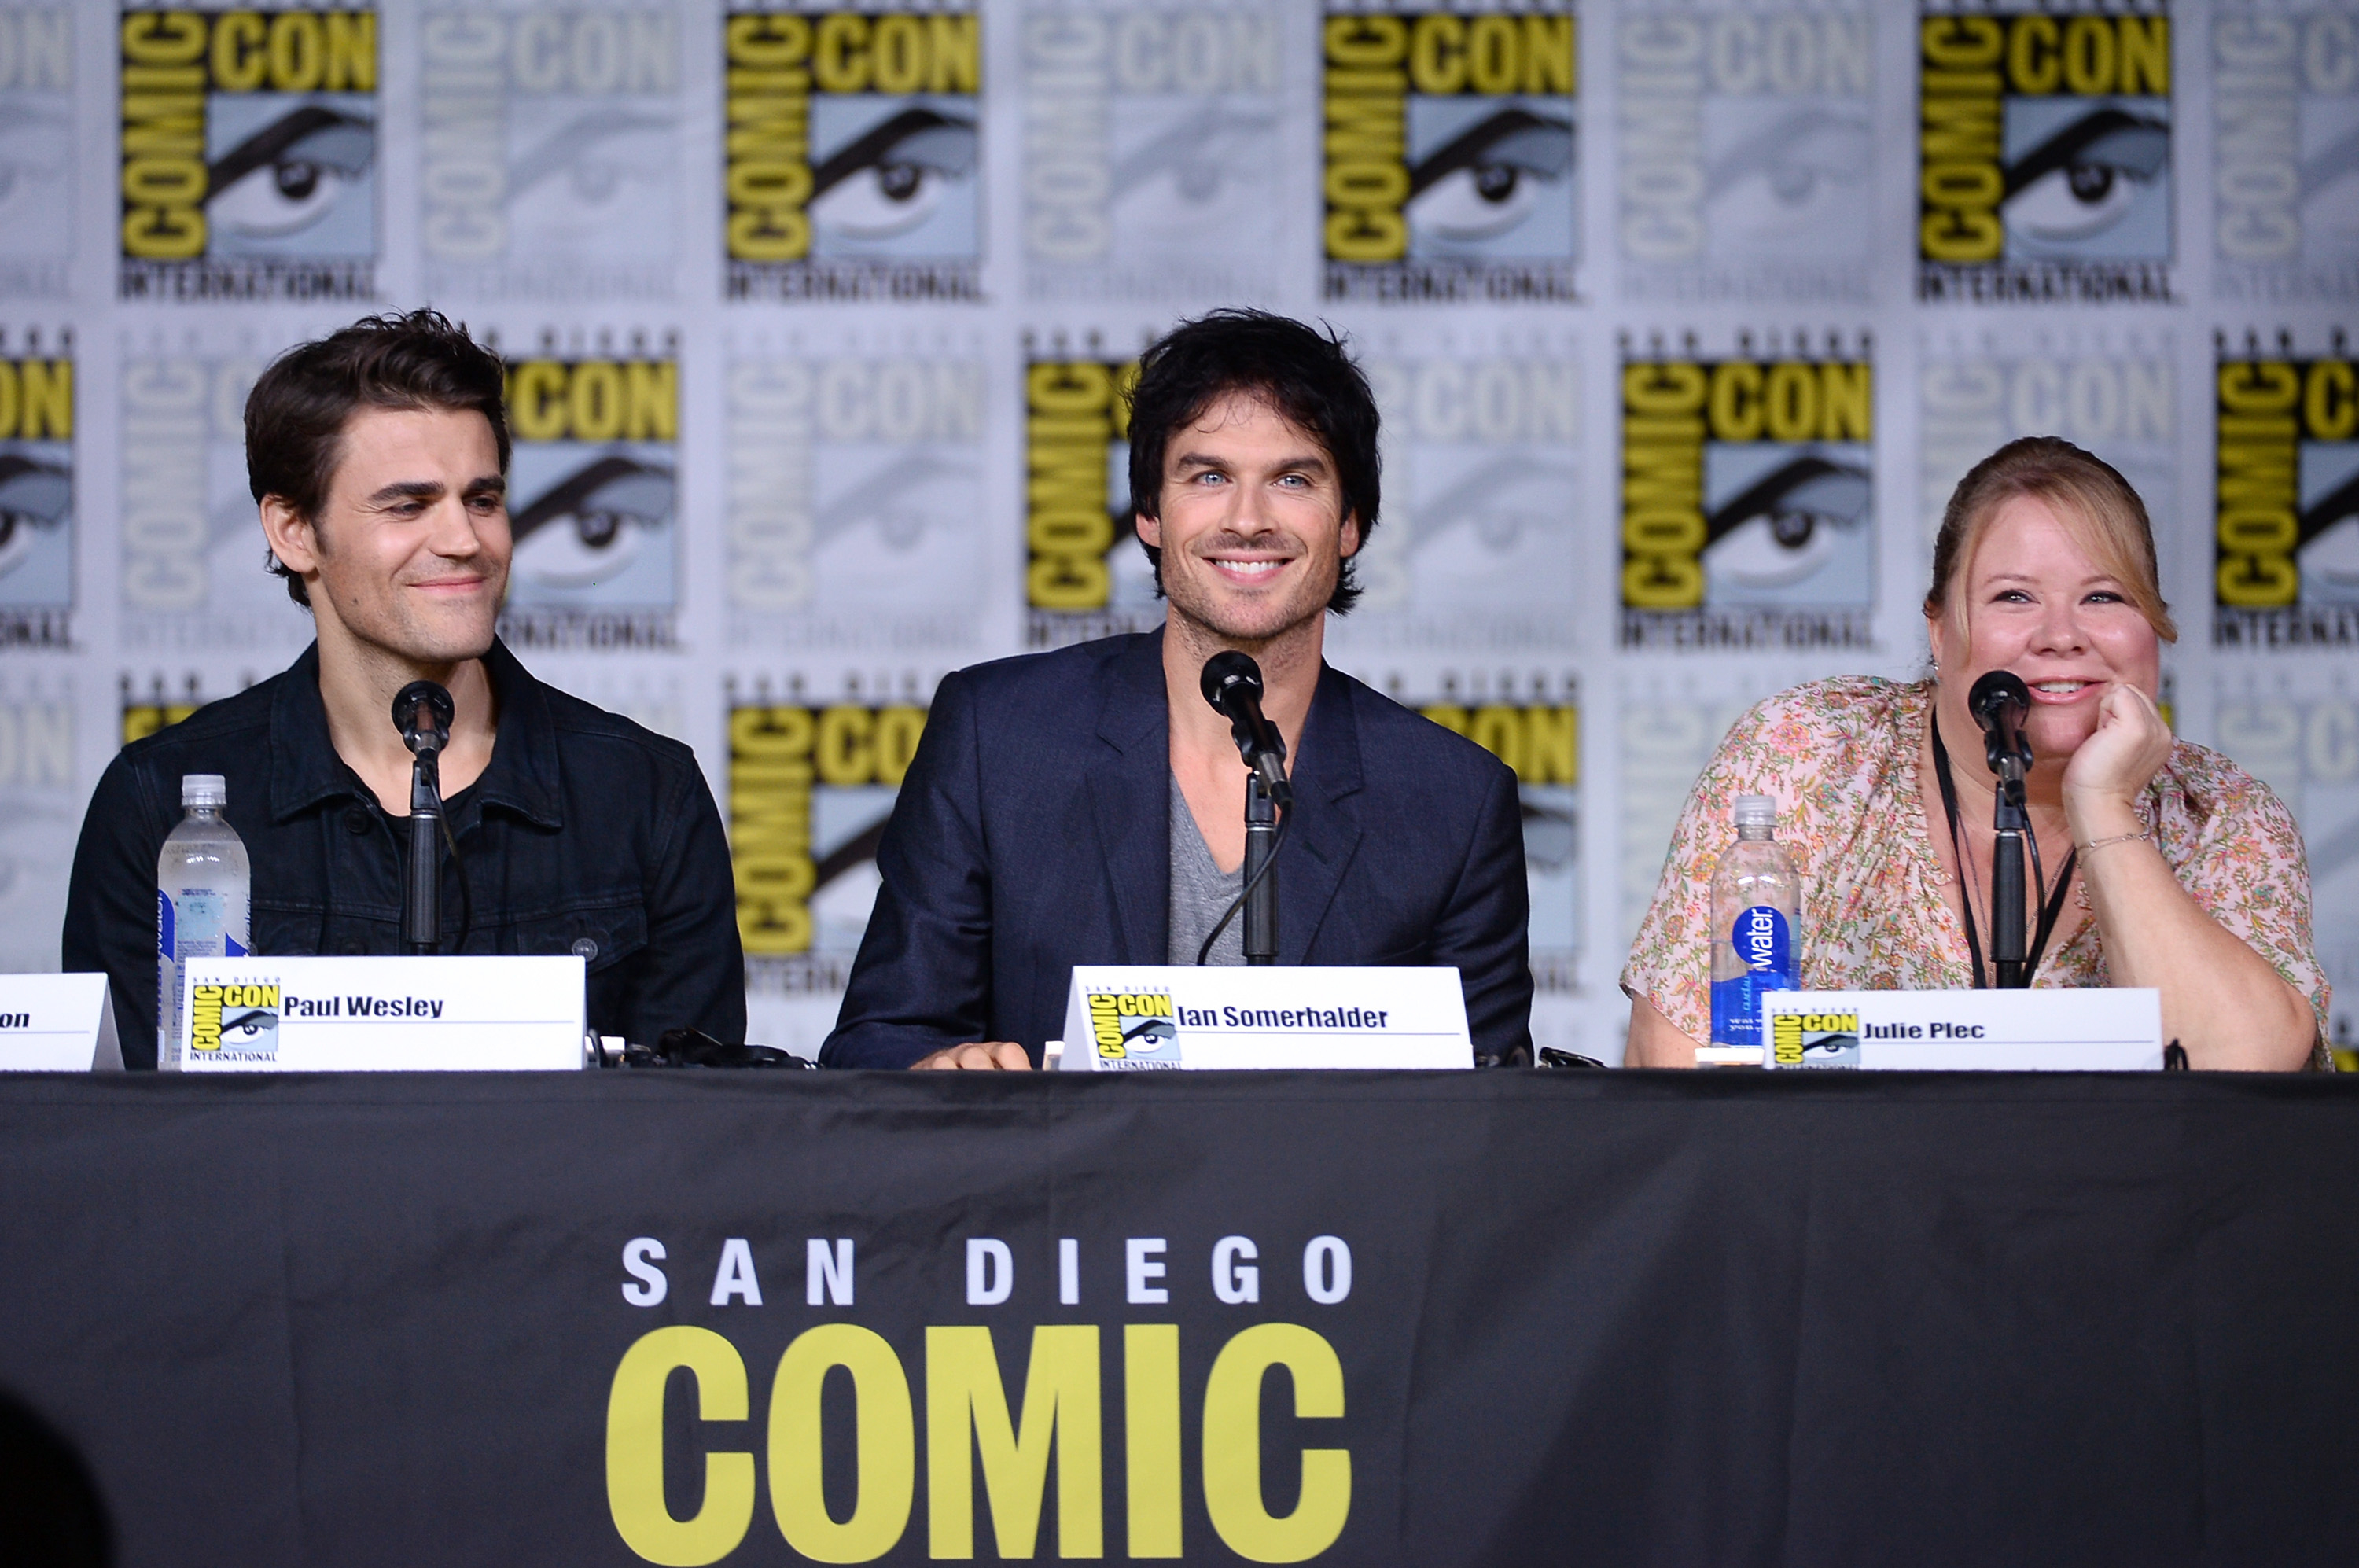 The Vampire Diaries cast at Comic-Con